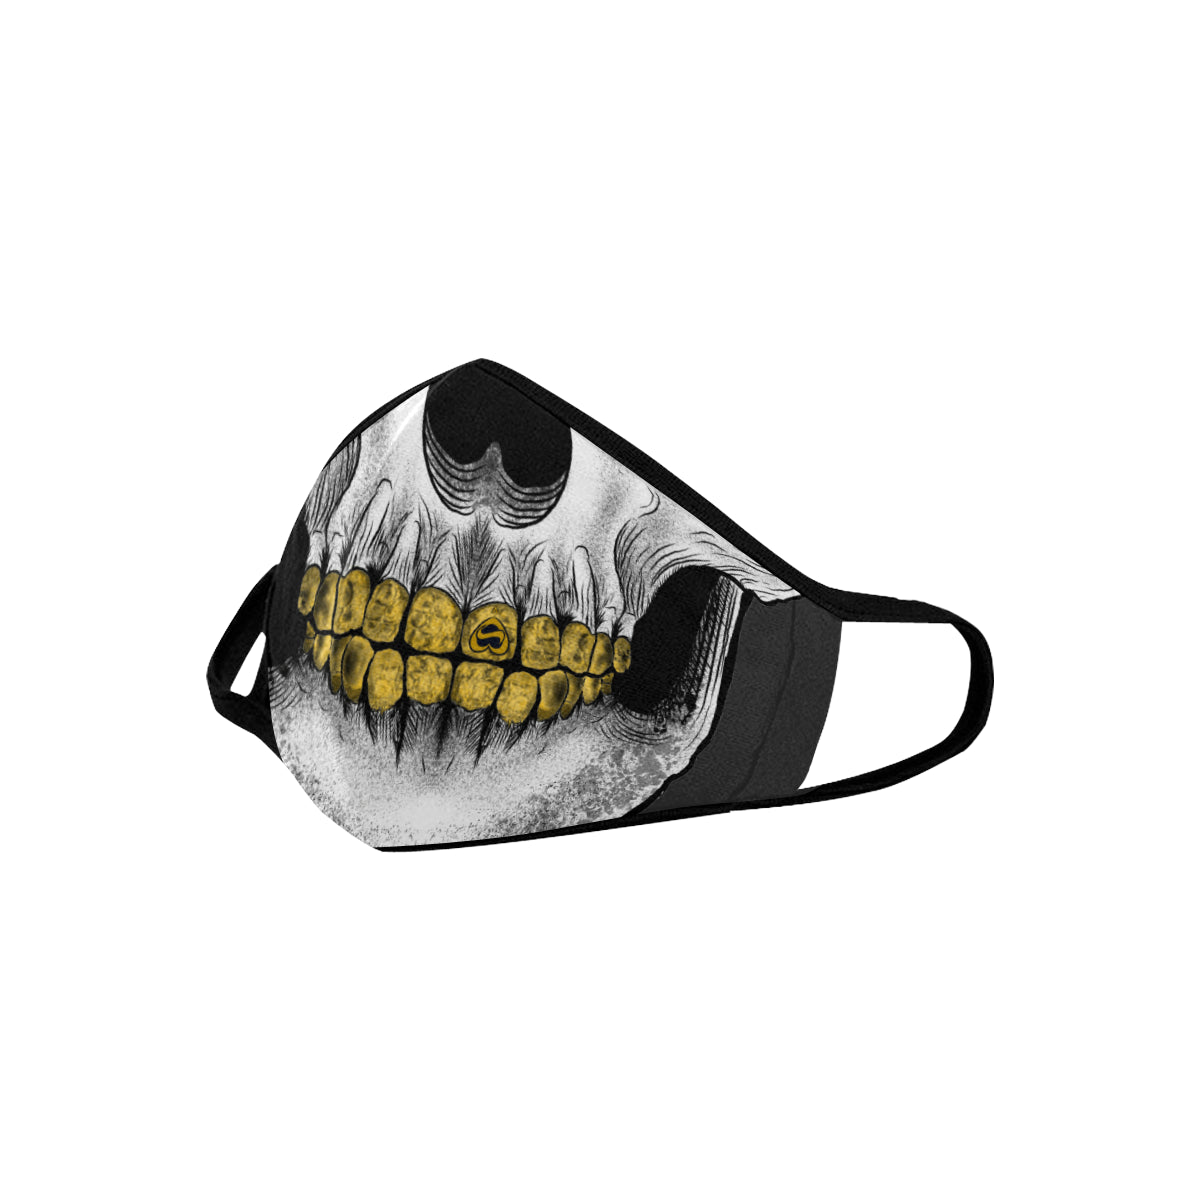 Ginto Ipin "gold teeth" skull Mouth Mask